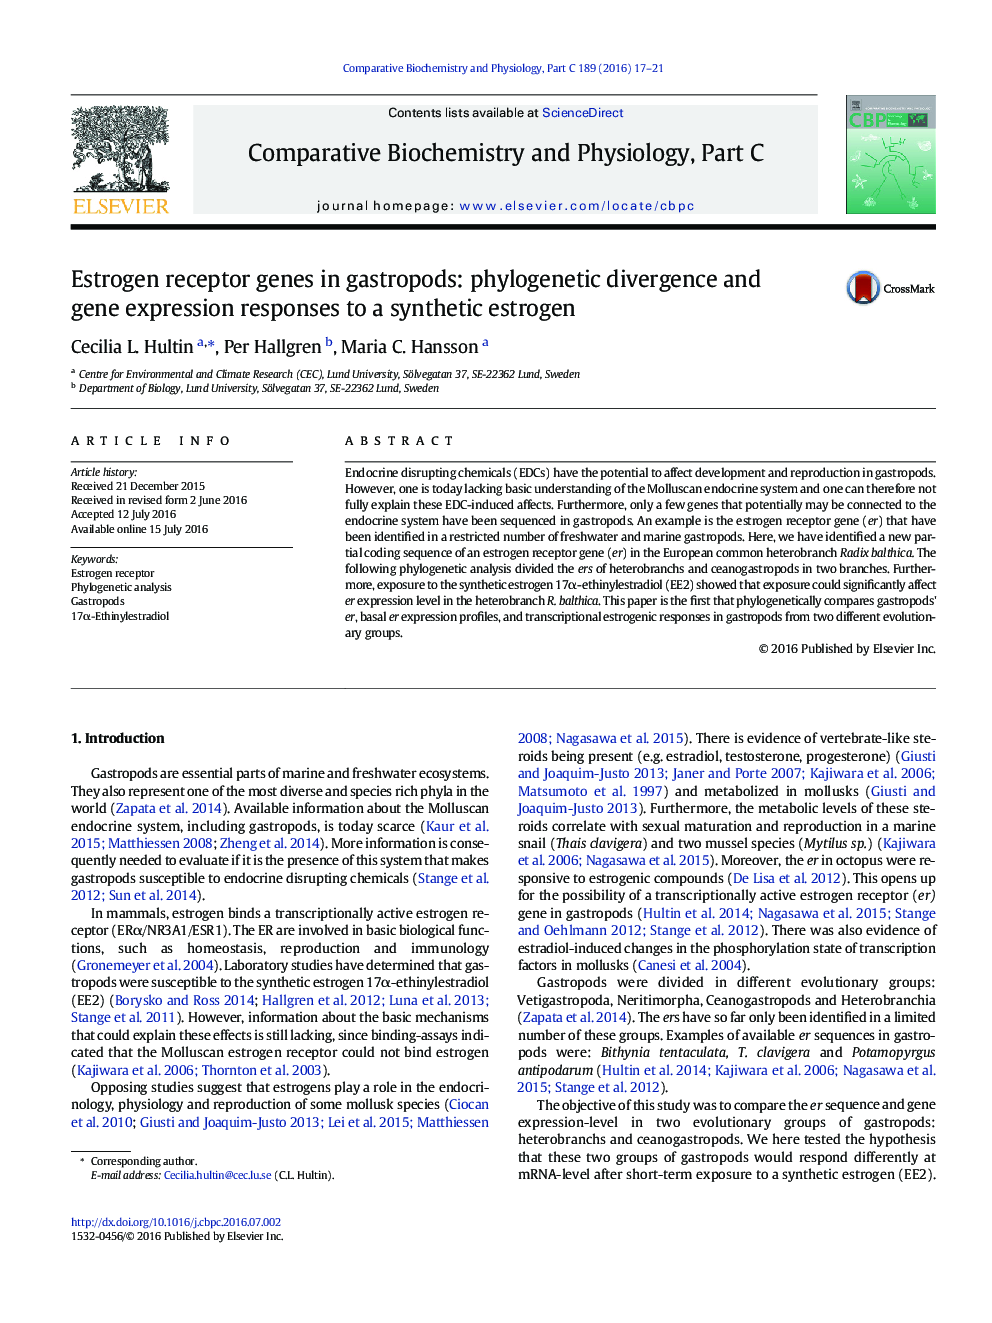 Estrogen receptor genes in gastropods: phylogenetic divergence and gene expression responses to a synthetic estrogen